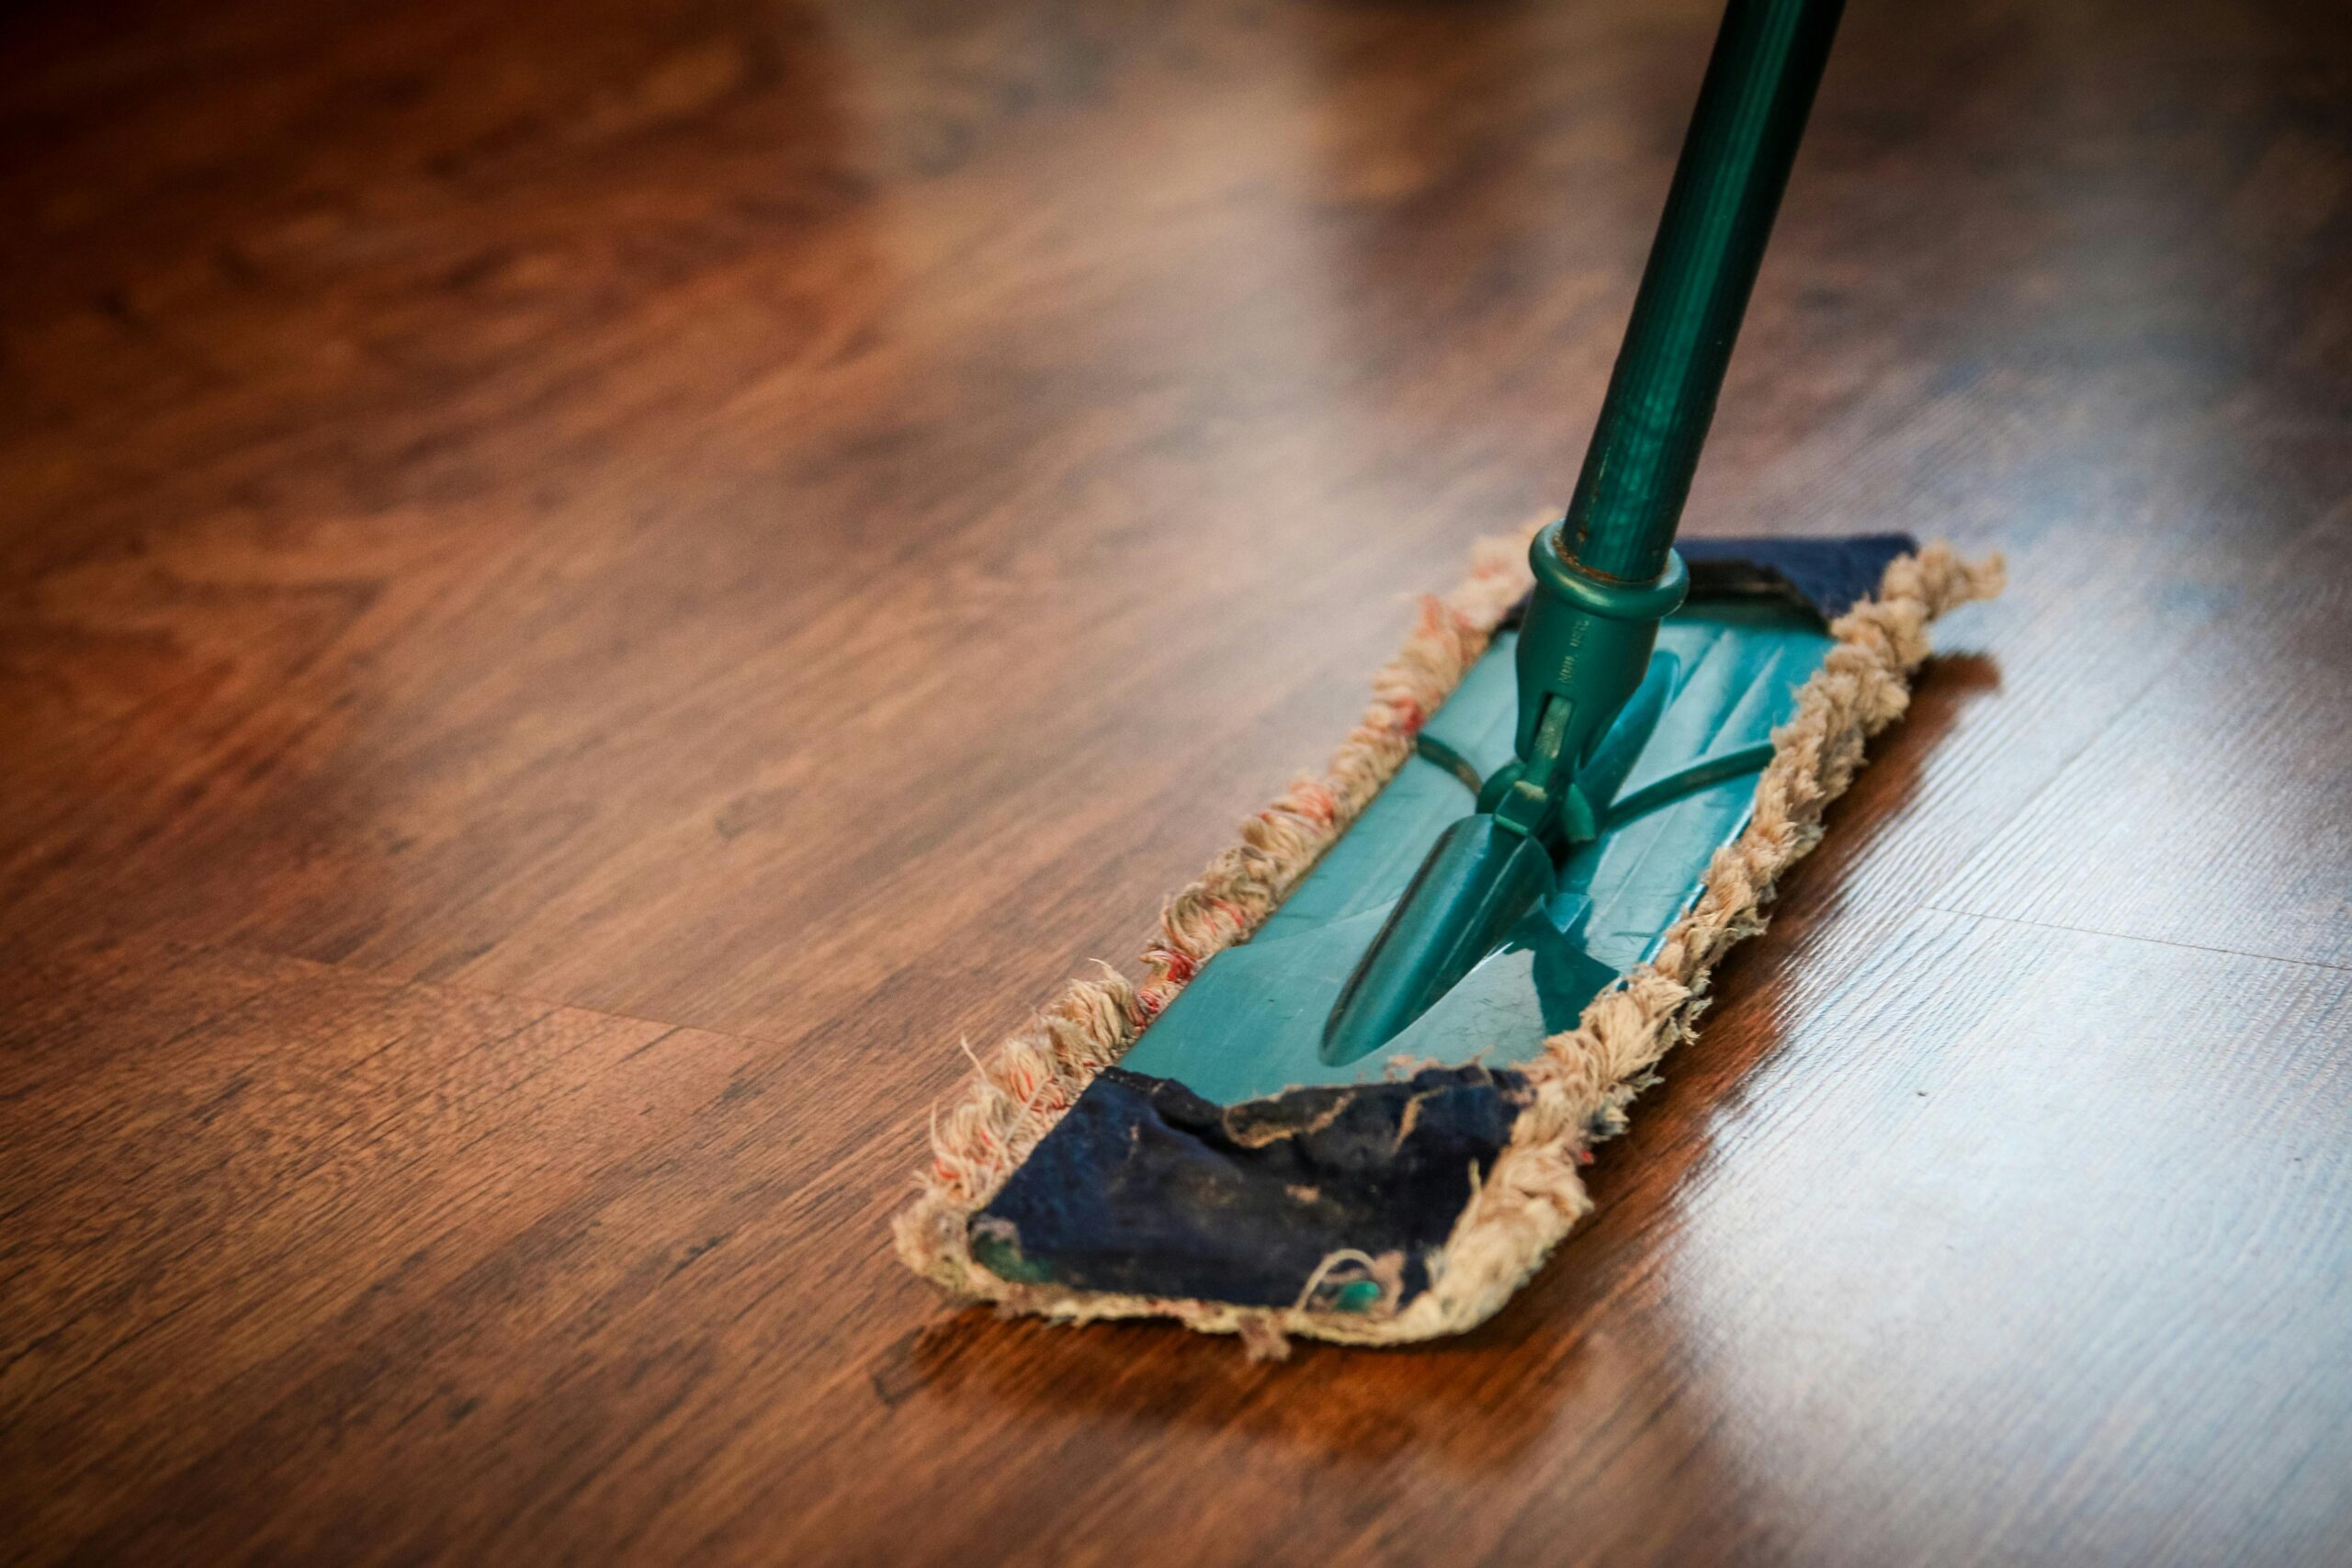 dry mop on hard wood floor